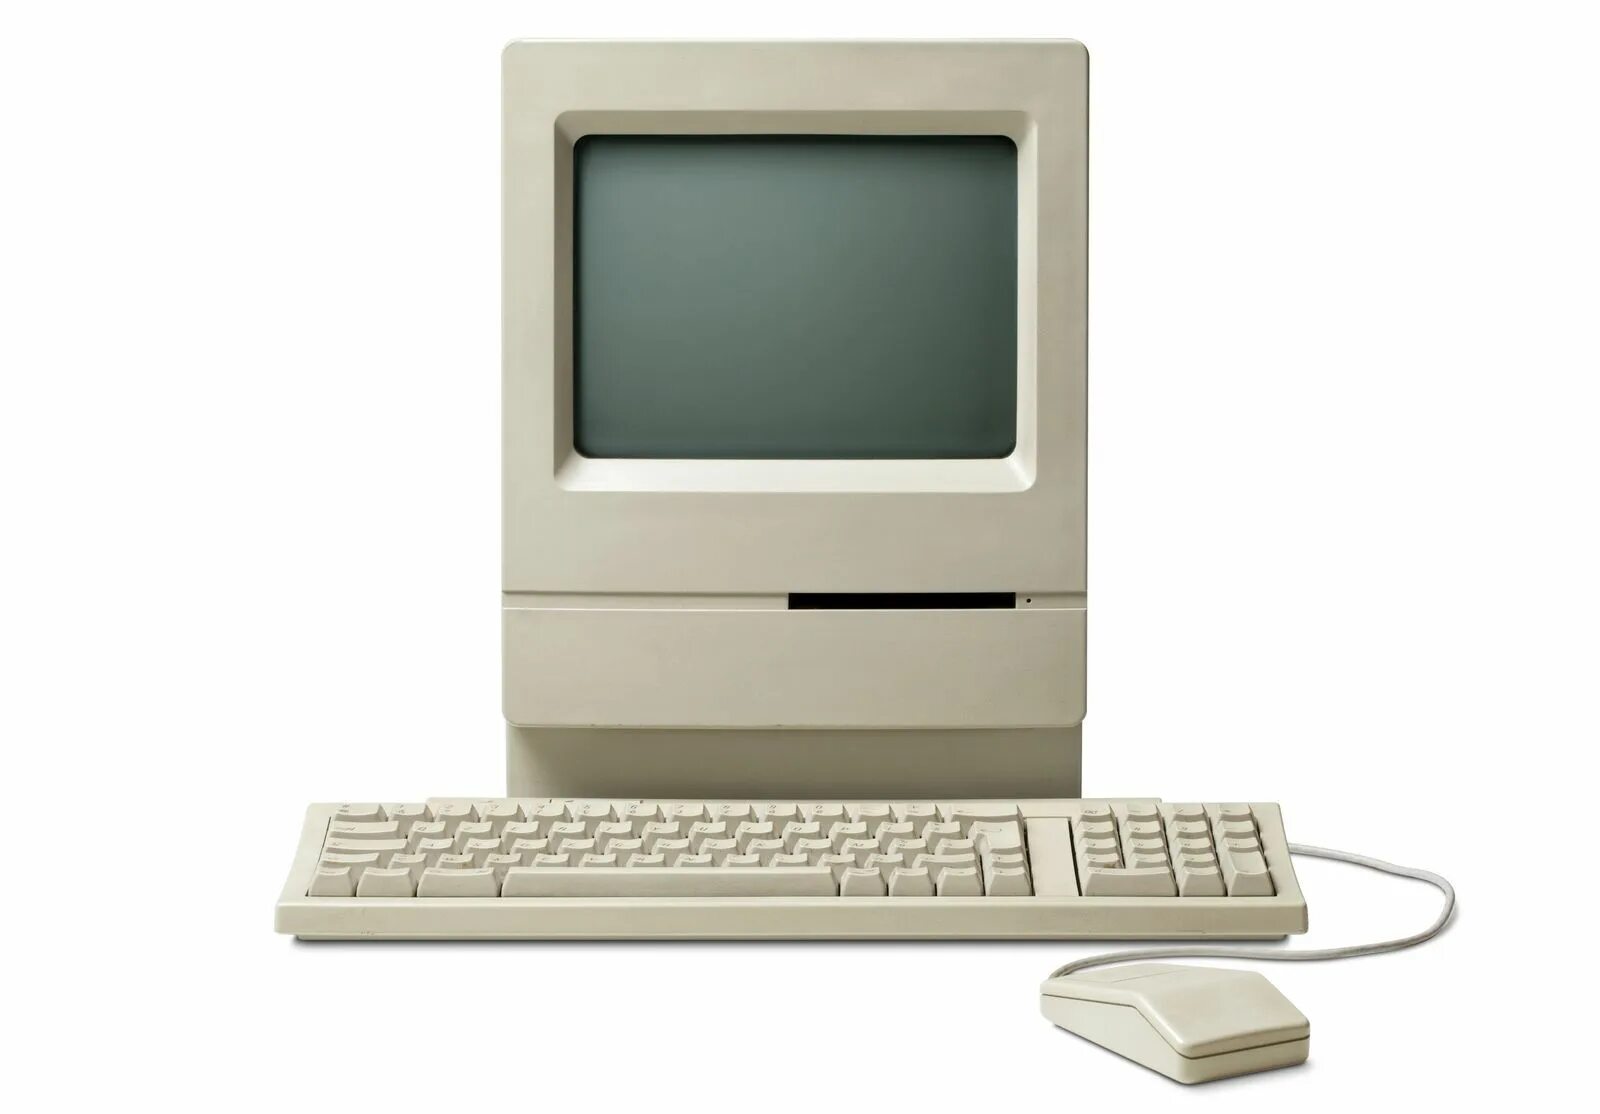 Old computer. Старый белый компьютер. Старый комп на белом фоне. Старый компьютер на прозрачном фоне. Старый компьютер без фона.